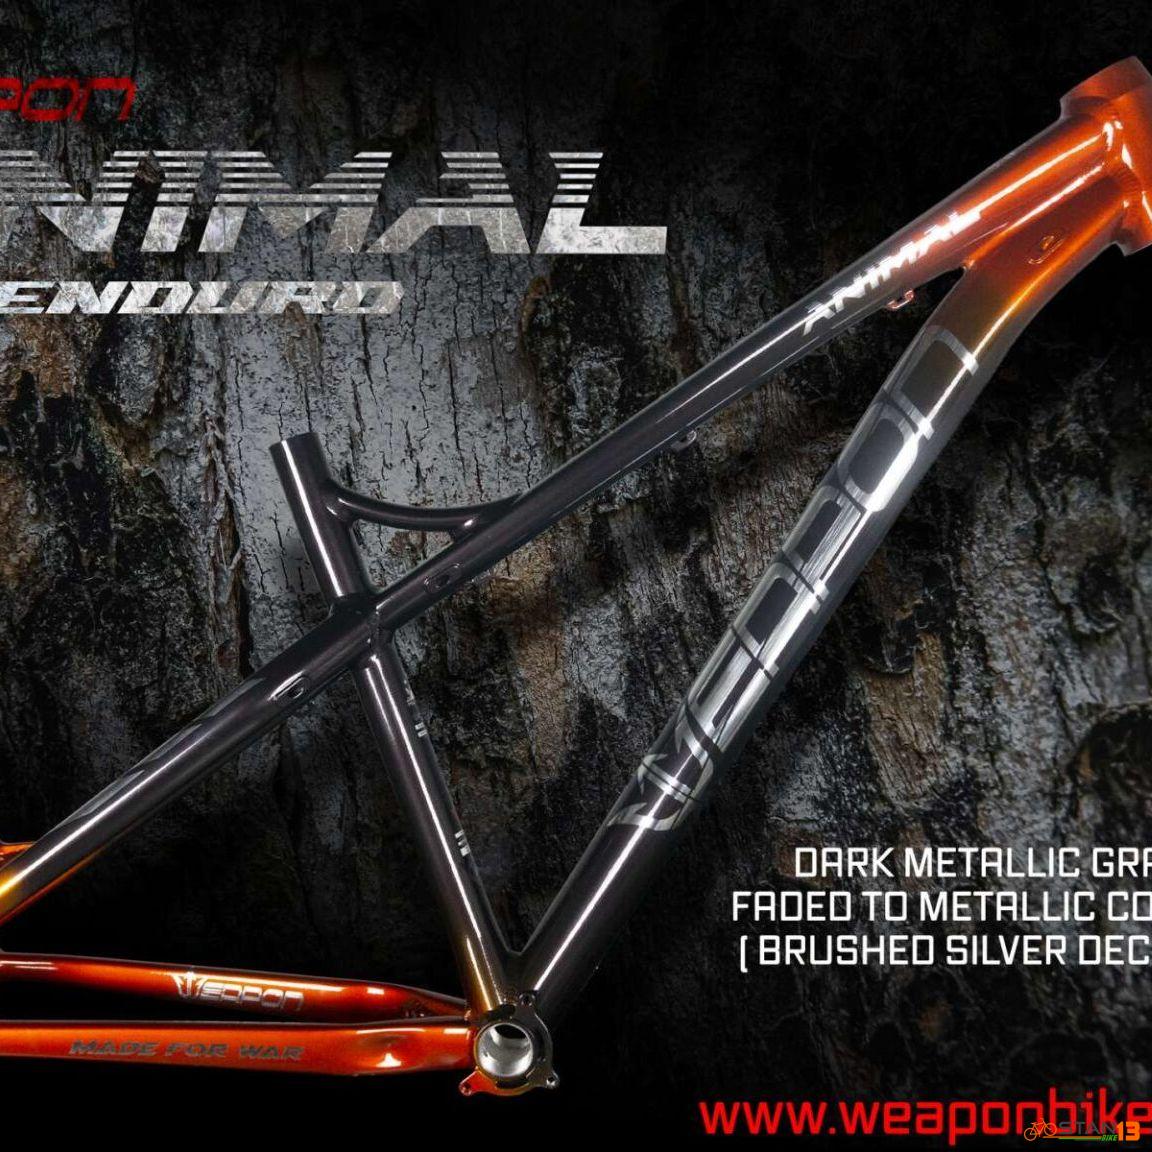 Frame Weapon Animal HT 27.5 Enduro Frame PILIPINAS EDITION